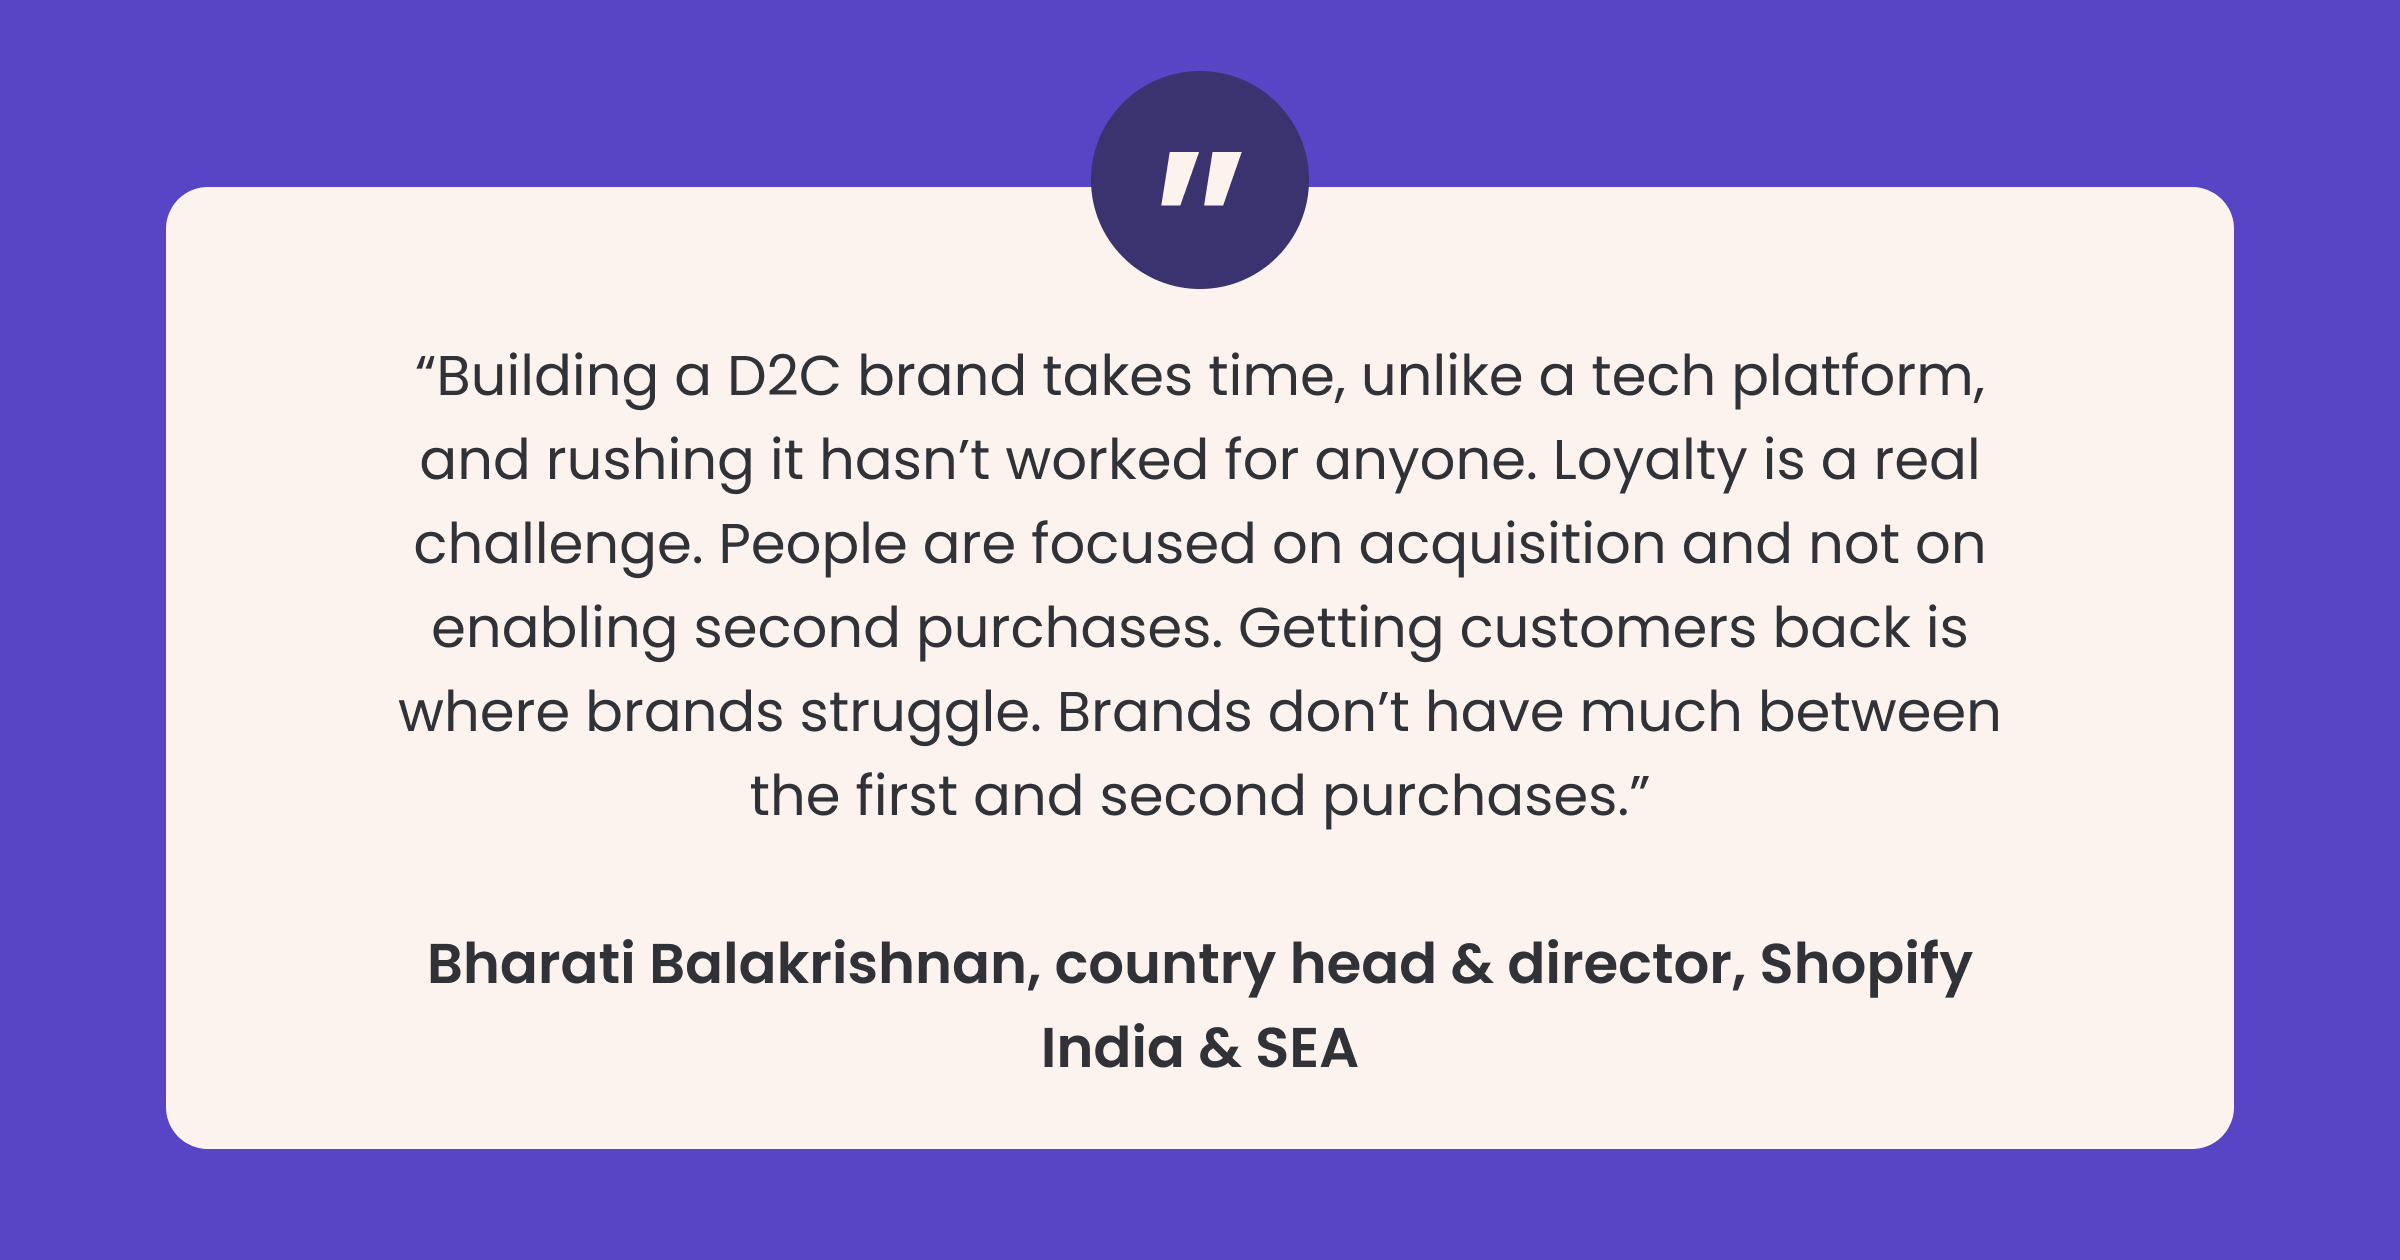 Bharati Balakrishnan, country head & director, Shopify India & SEA